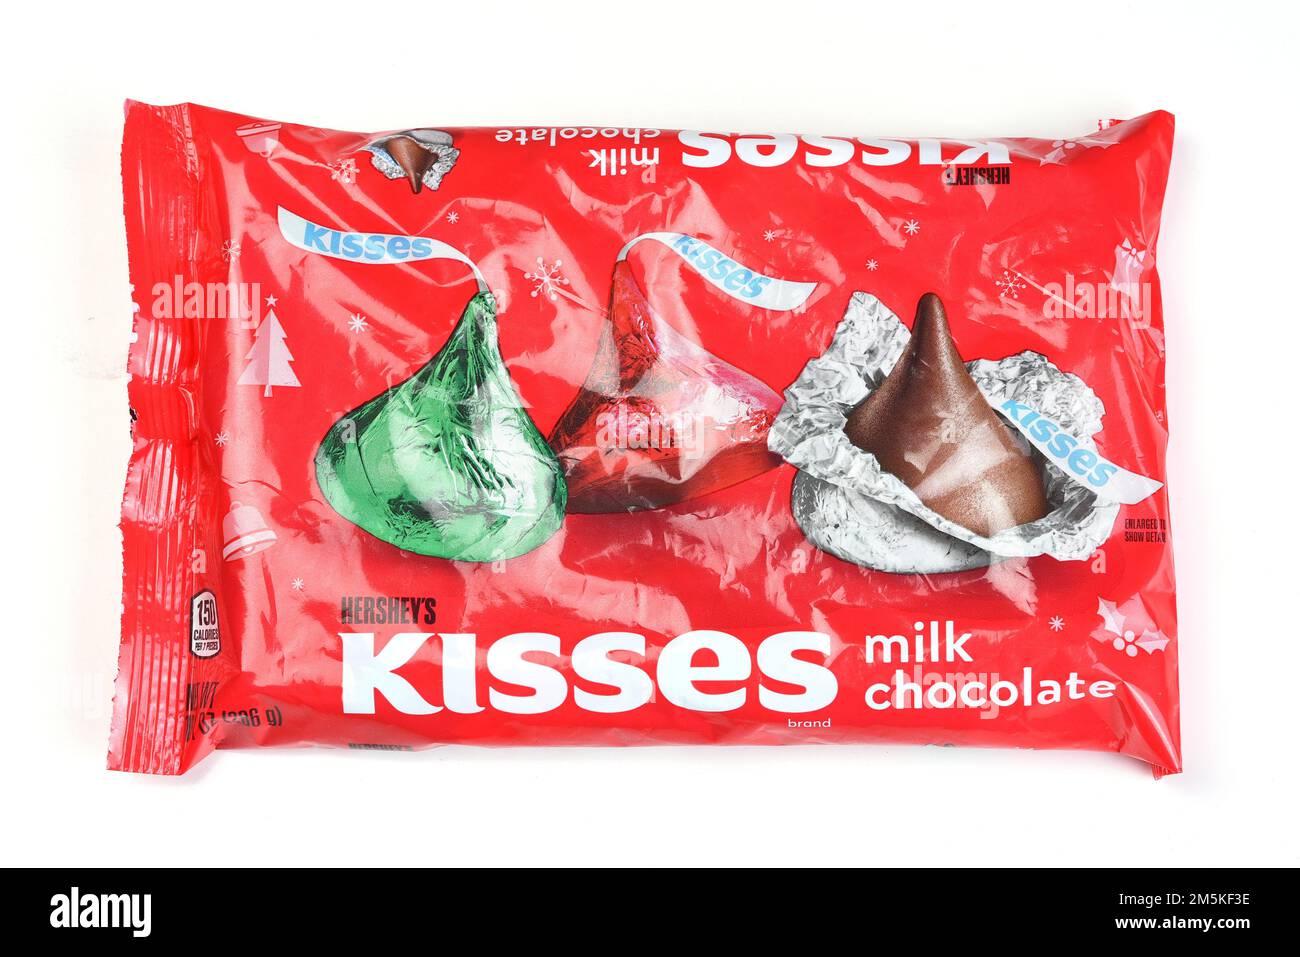 IRIVNE, CALIFORNIA - 23 DEC 2022: A bag of Hersheys Milk Chocolate Kisses wrapped in Christmas Colors. Stock Photo